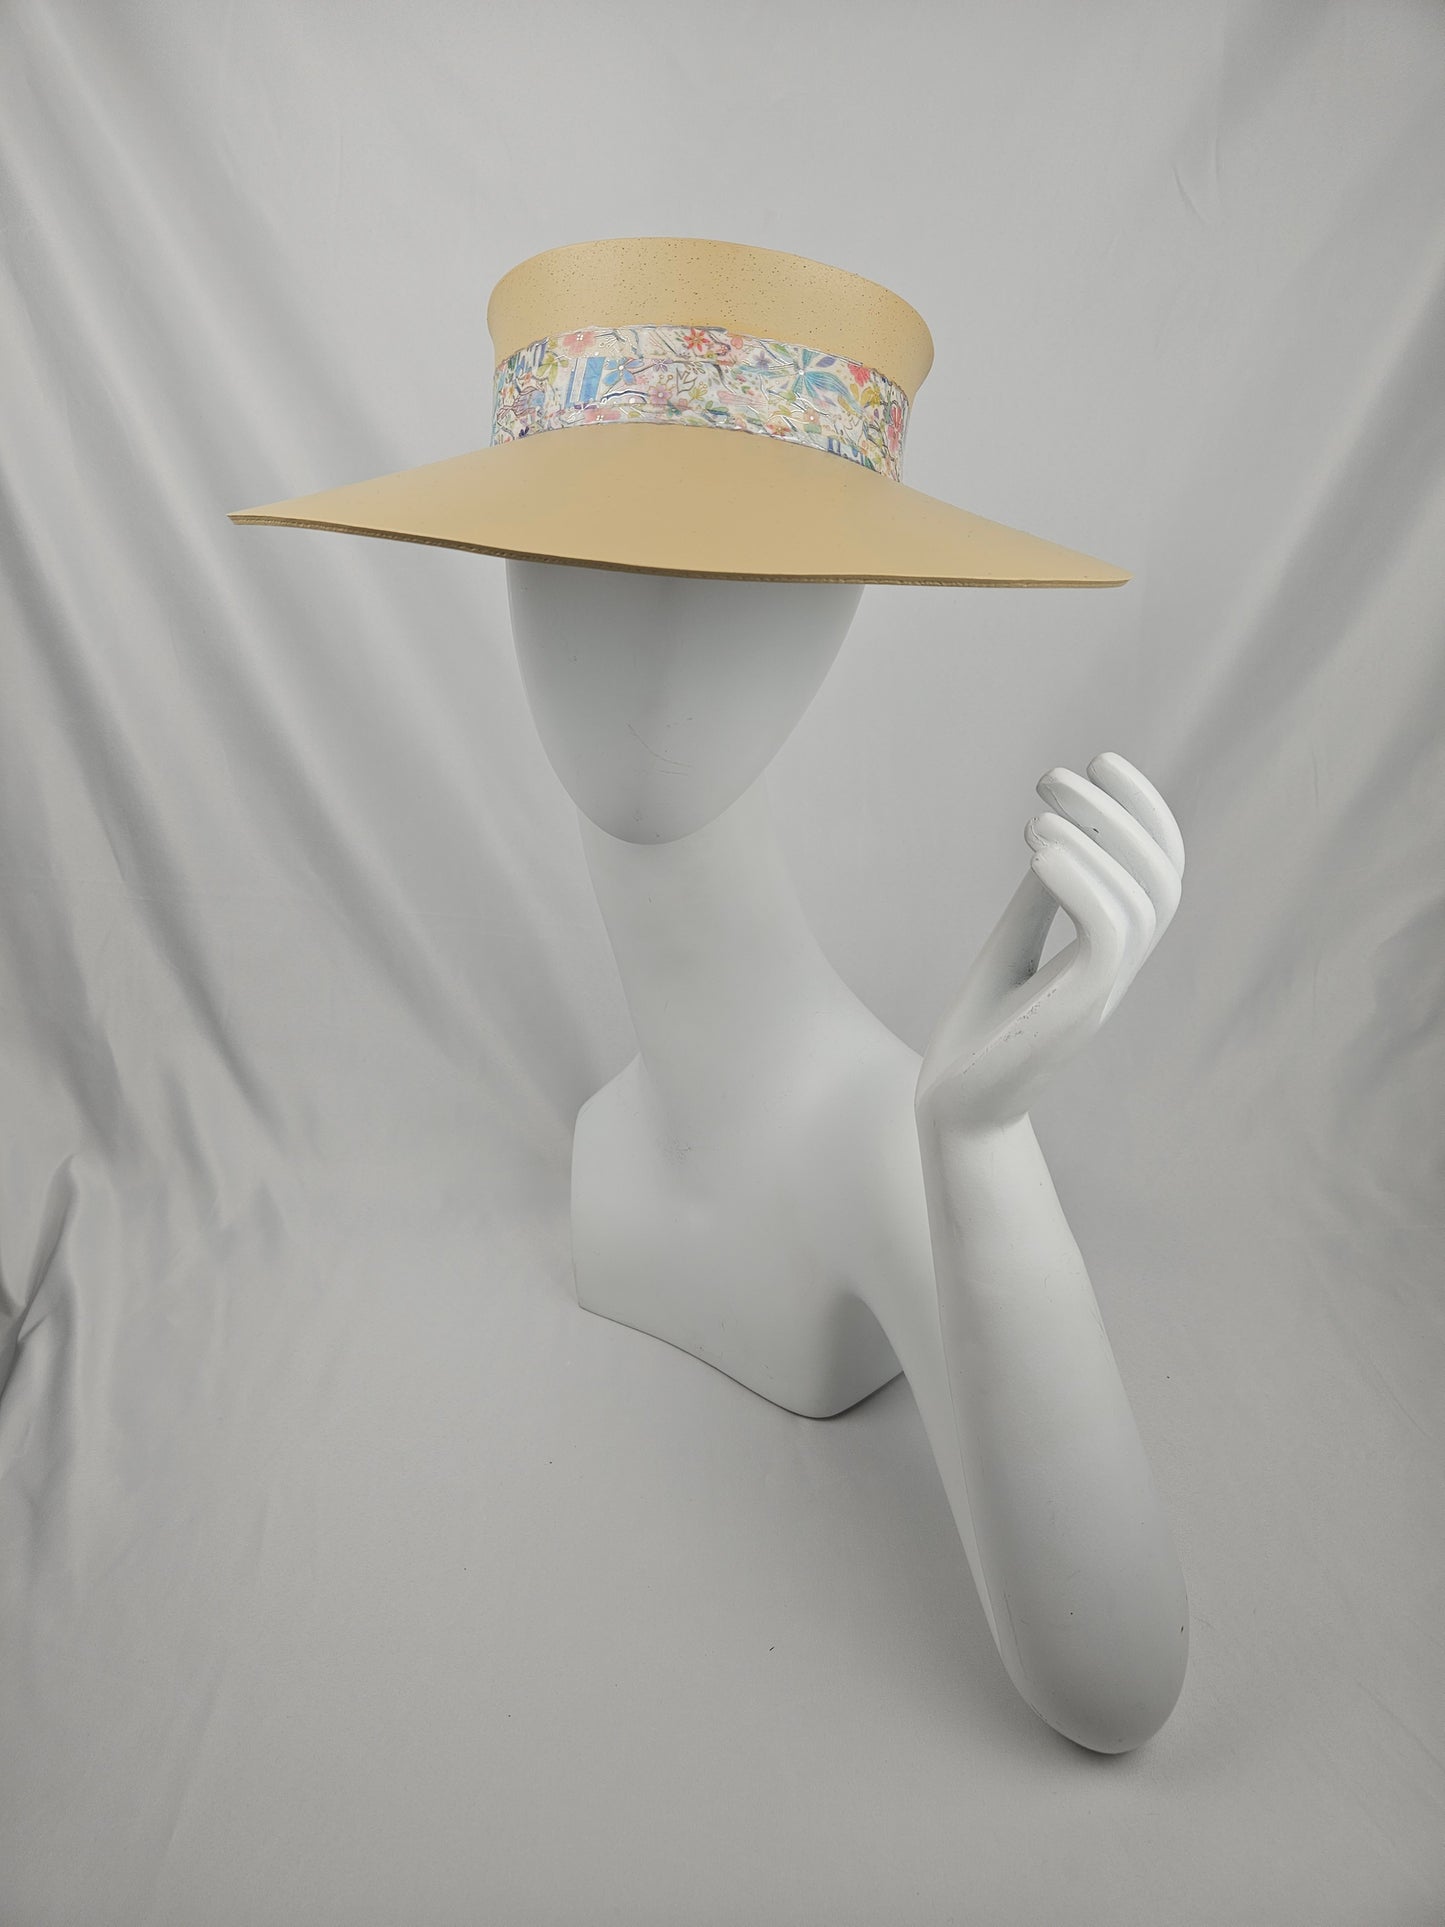 Beautiful Beige Audrey Cute Sun Visor Hat with Pastel Multicolor Floral Band: Walks, Brunch, Tea, Garden, Golf, Summer, Church, No Headache